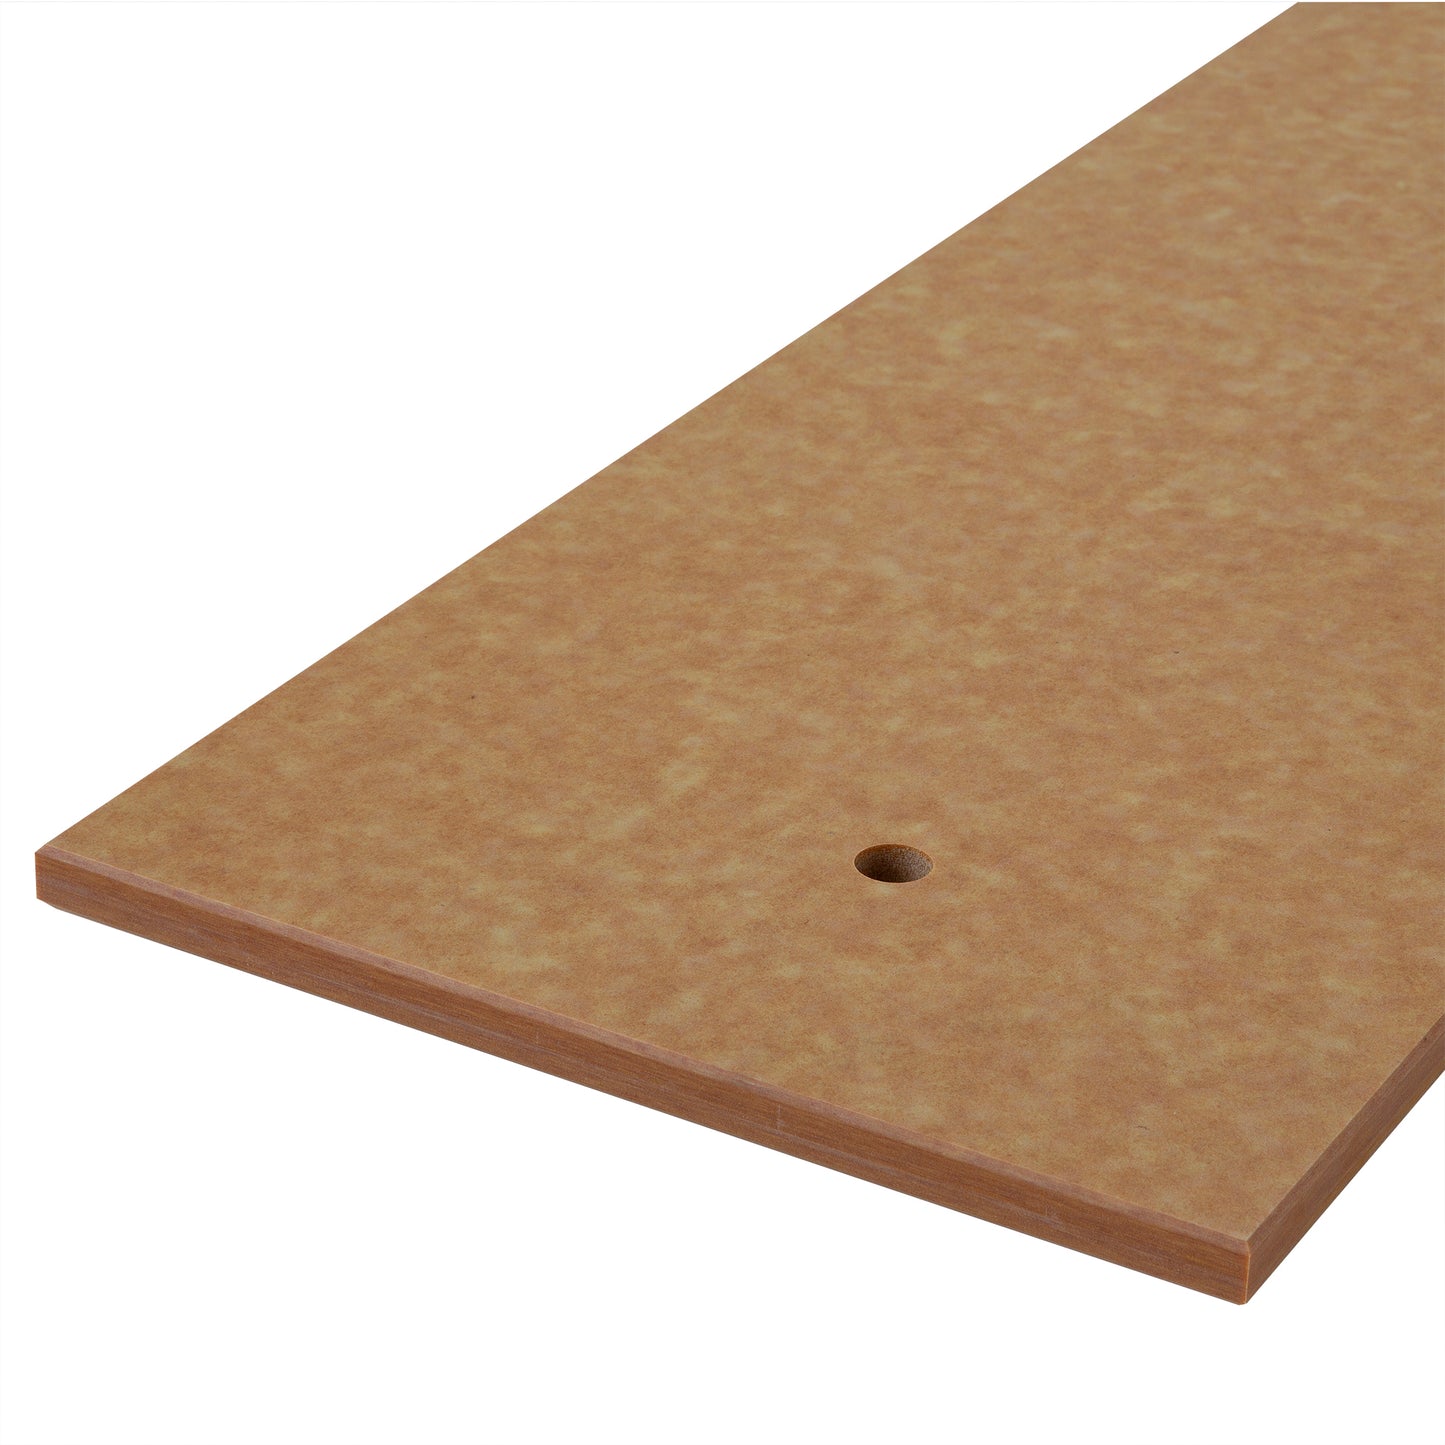 Composite wood-tone cutting board - 1/2" X 8" X 36-1/4" (SKU - 807773)